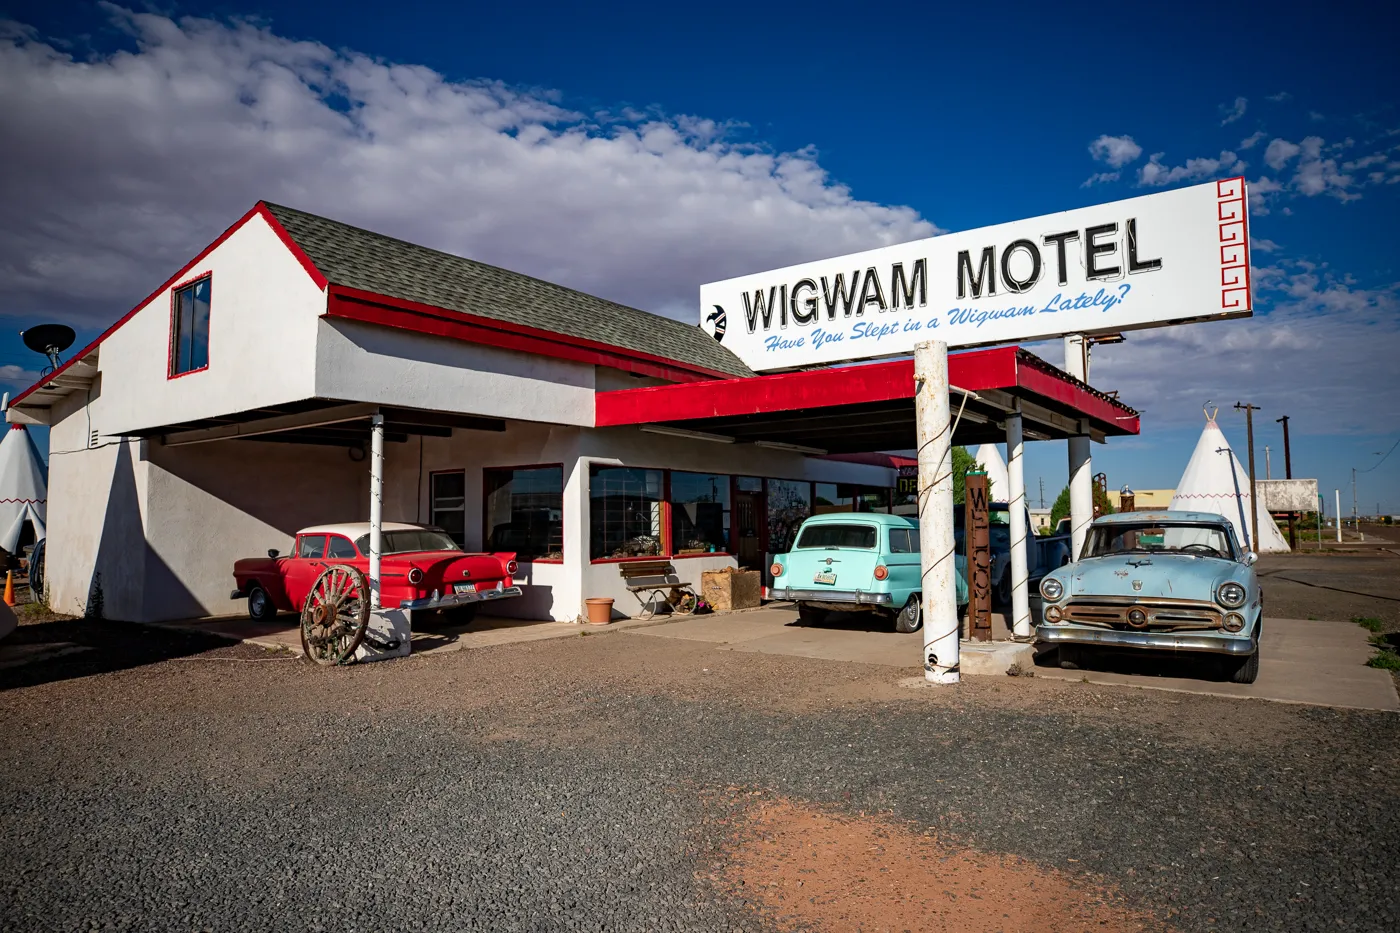 Reception building at Wigwam Motel in Holbrook, Arizona - Route 66 Motel - Wigwam Village Motel #6